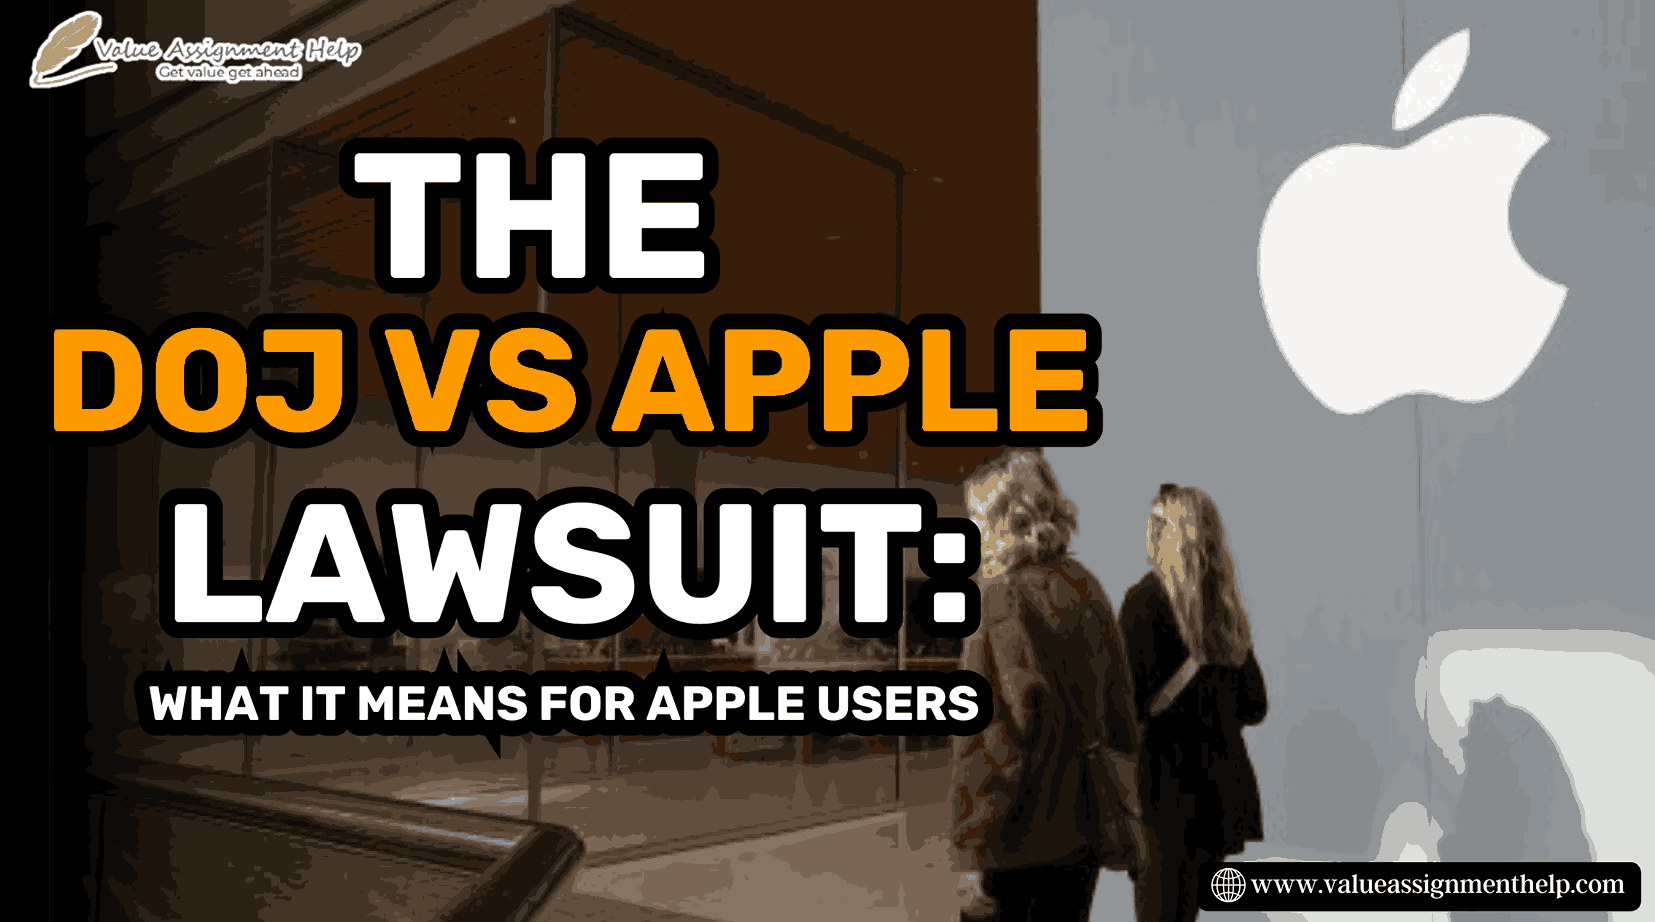 The DOJ vs Apple Lawsuit: What it means for Apple Users